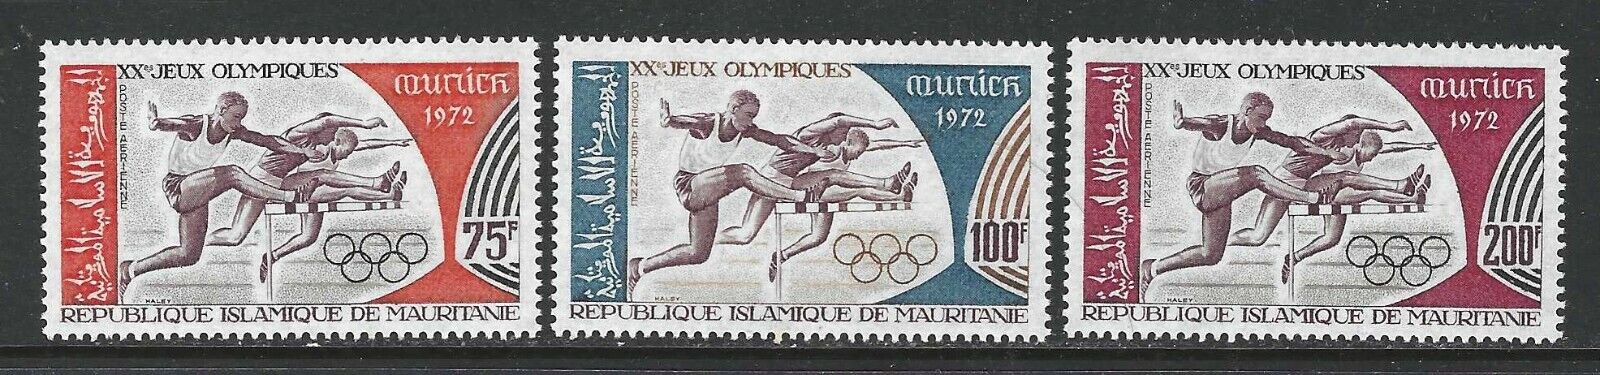 Mauritania - C121-c123 Mnh - 1972 - Munich Olympic Games